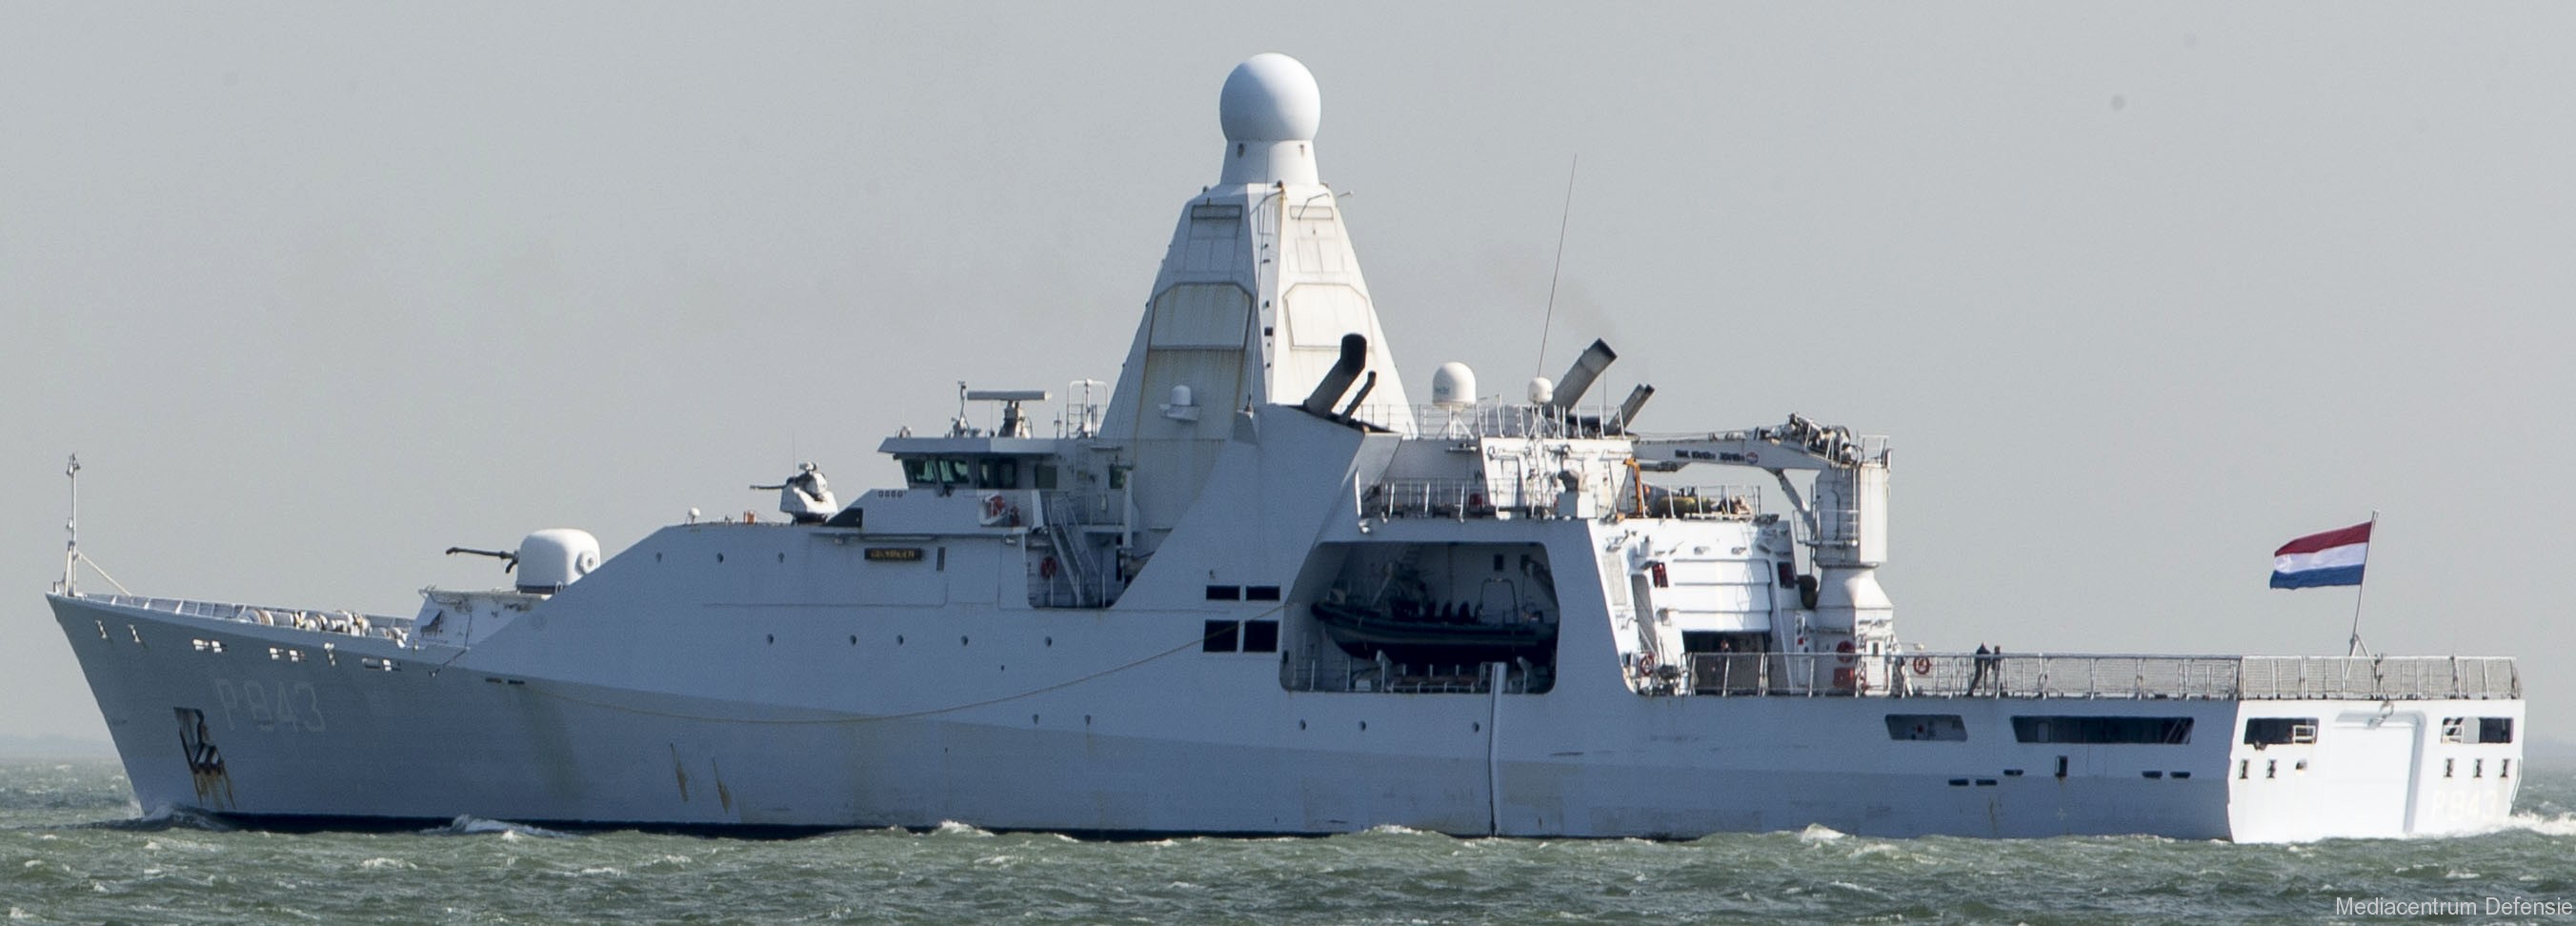 holland class offshore patrol vessel opv royal netherlands navy p-843 hnlms groningen 03x